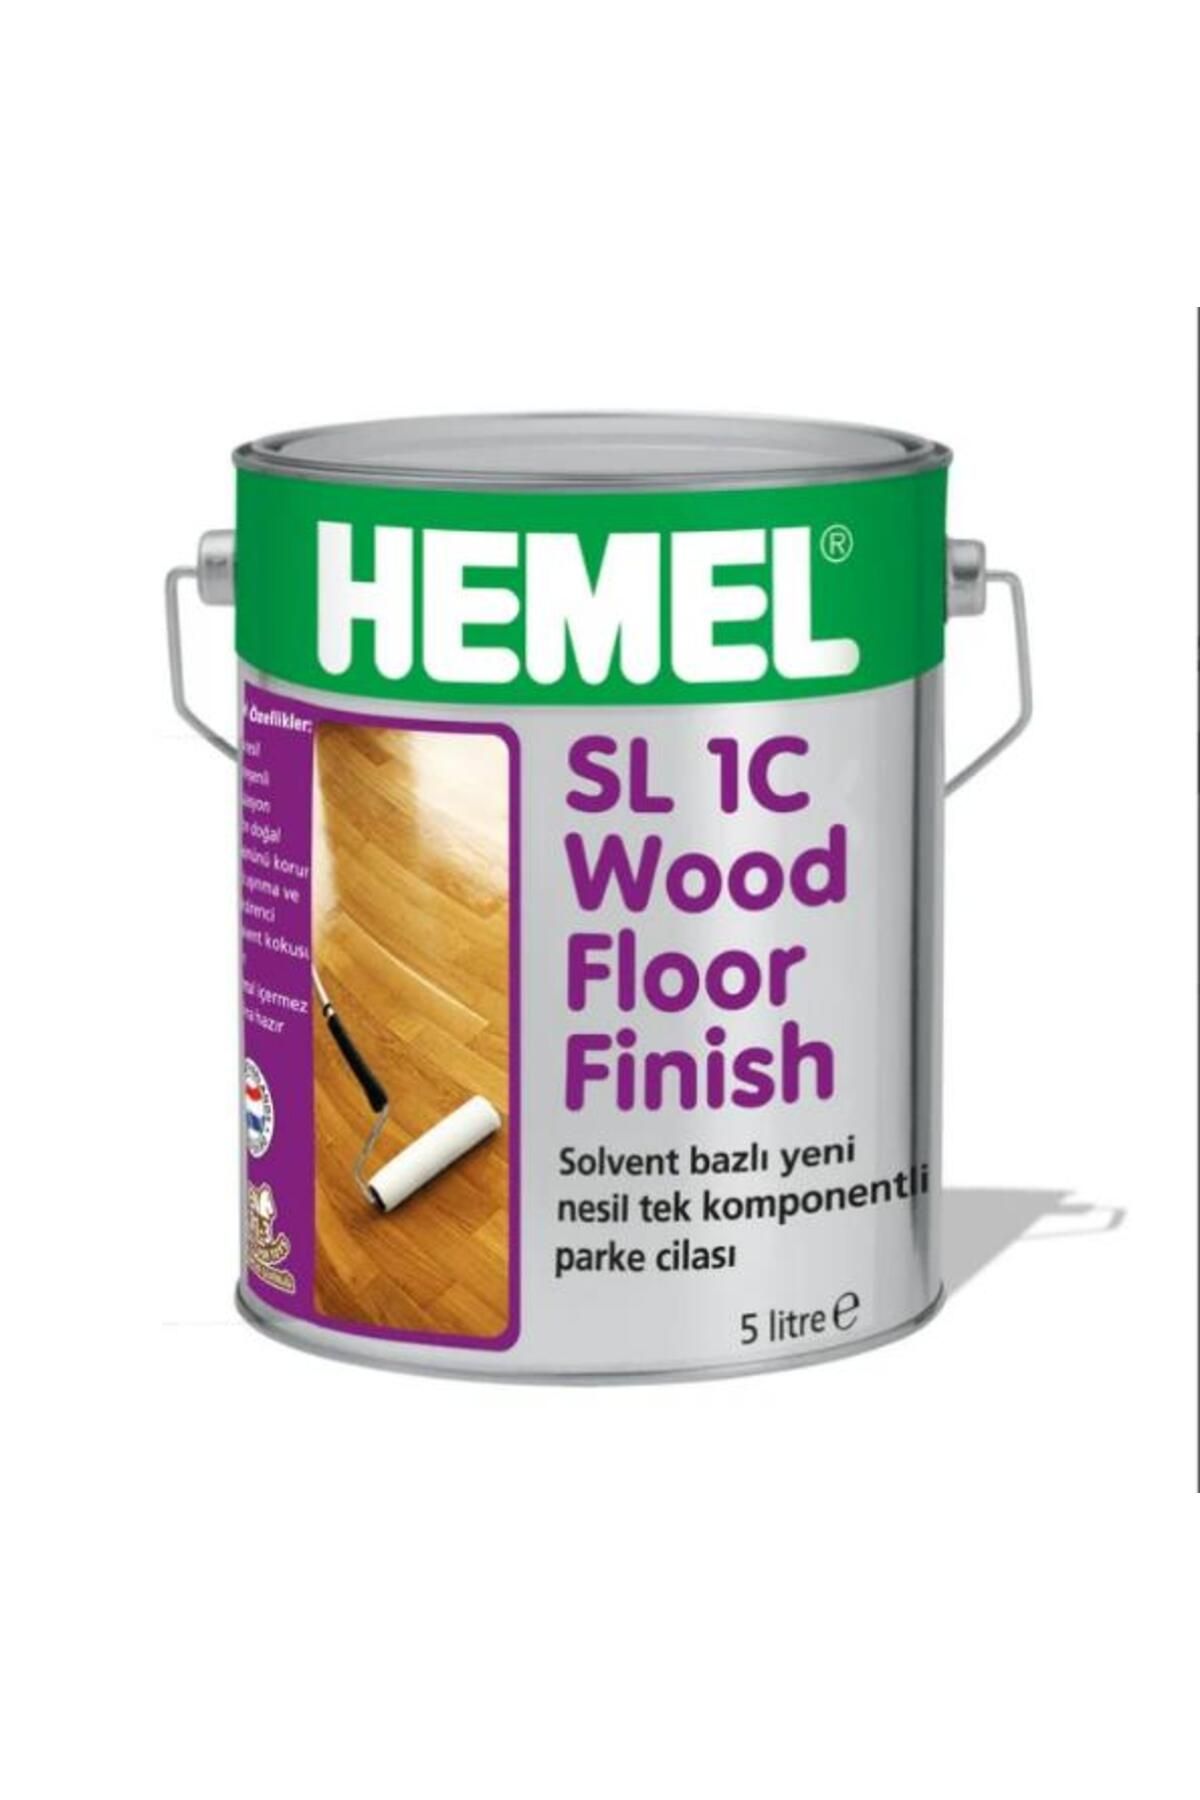 Hemel Sl 1C Wood Floor Finish Mat 5 lt Parke Cilası Solvent Bazlı